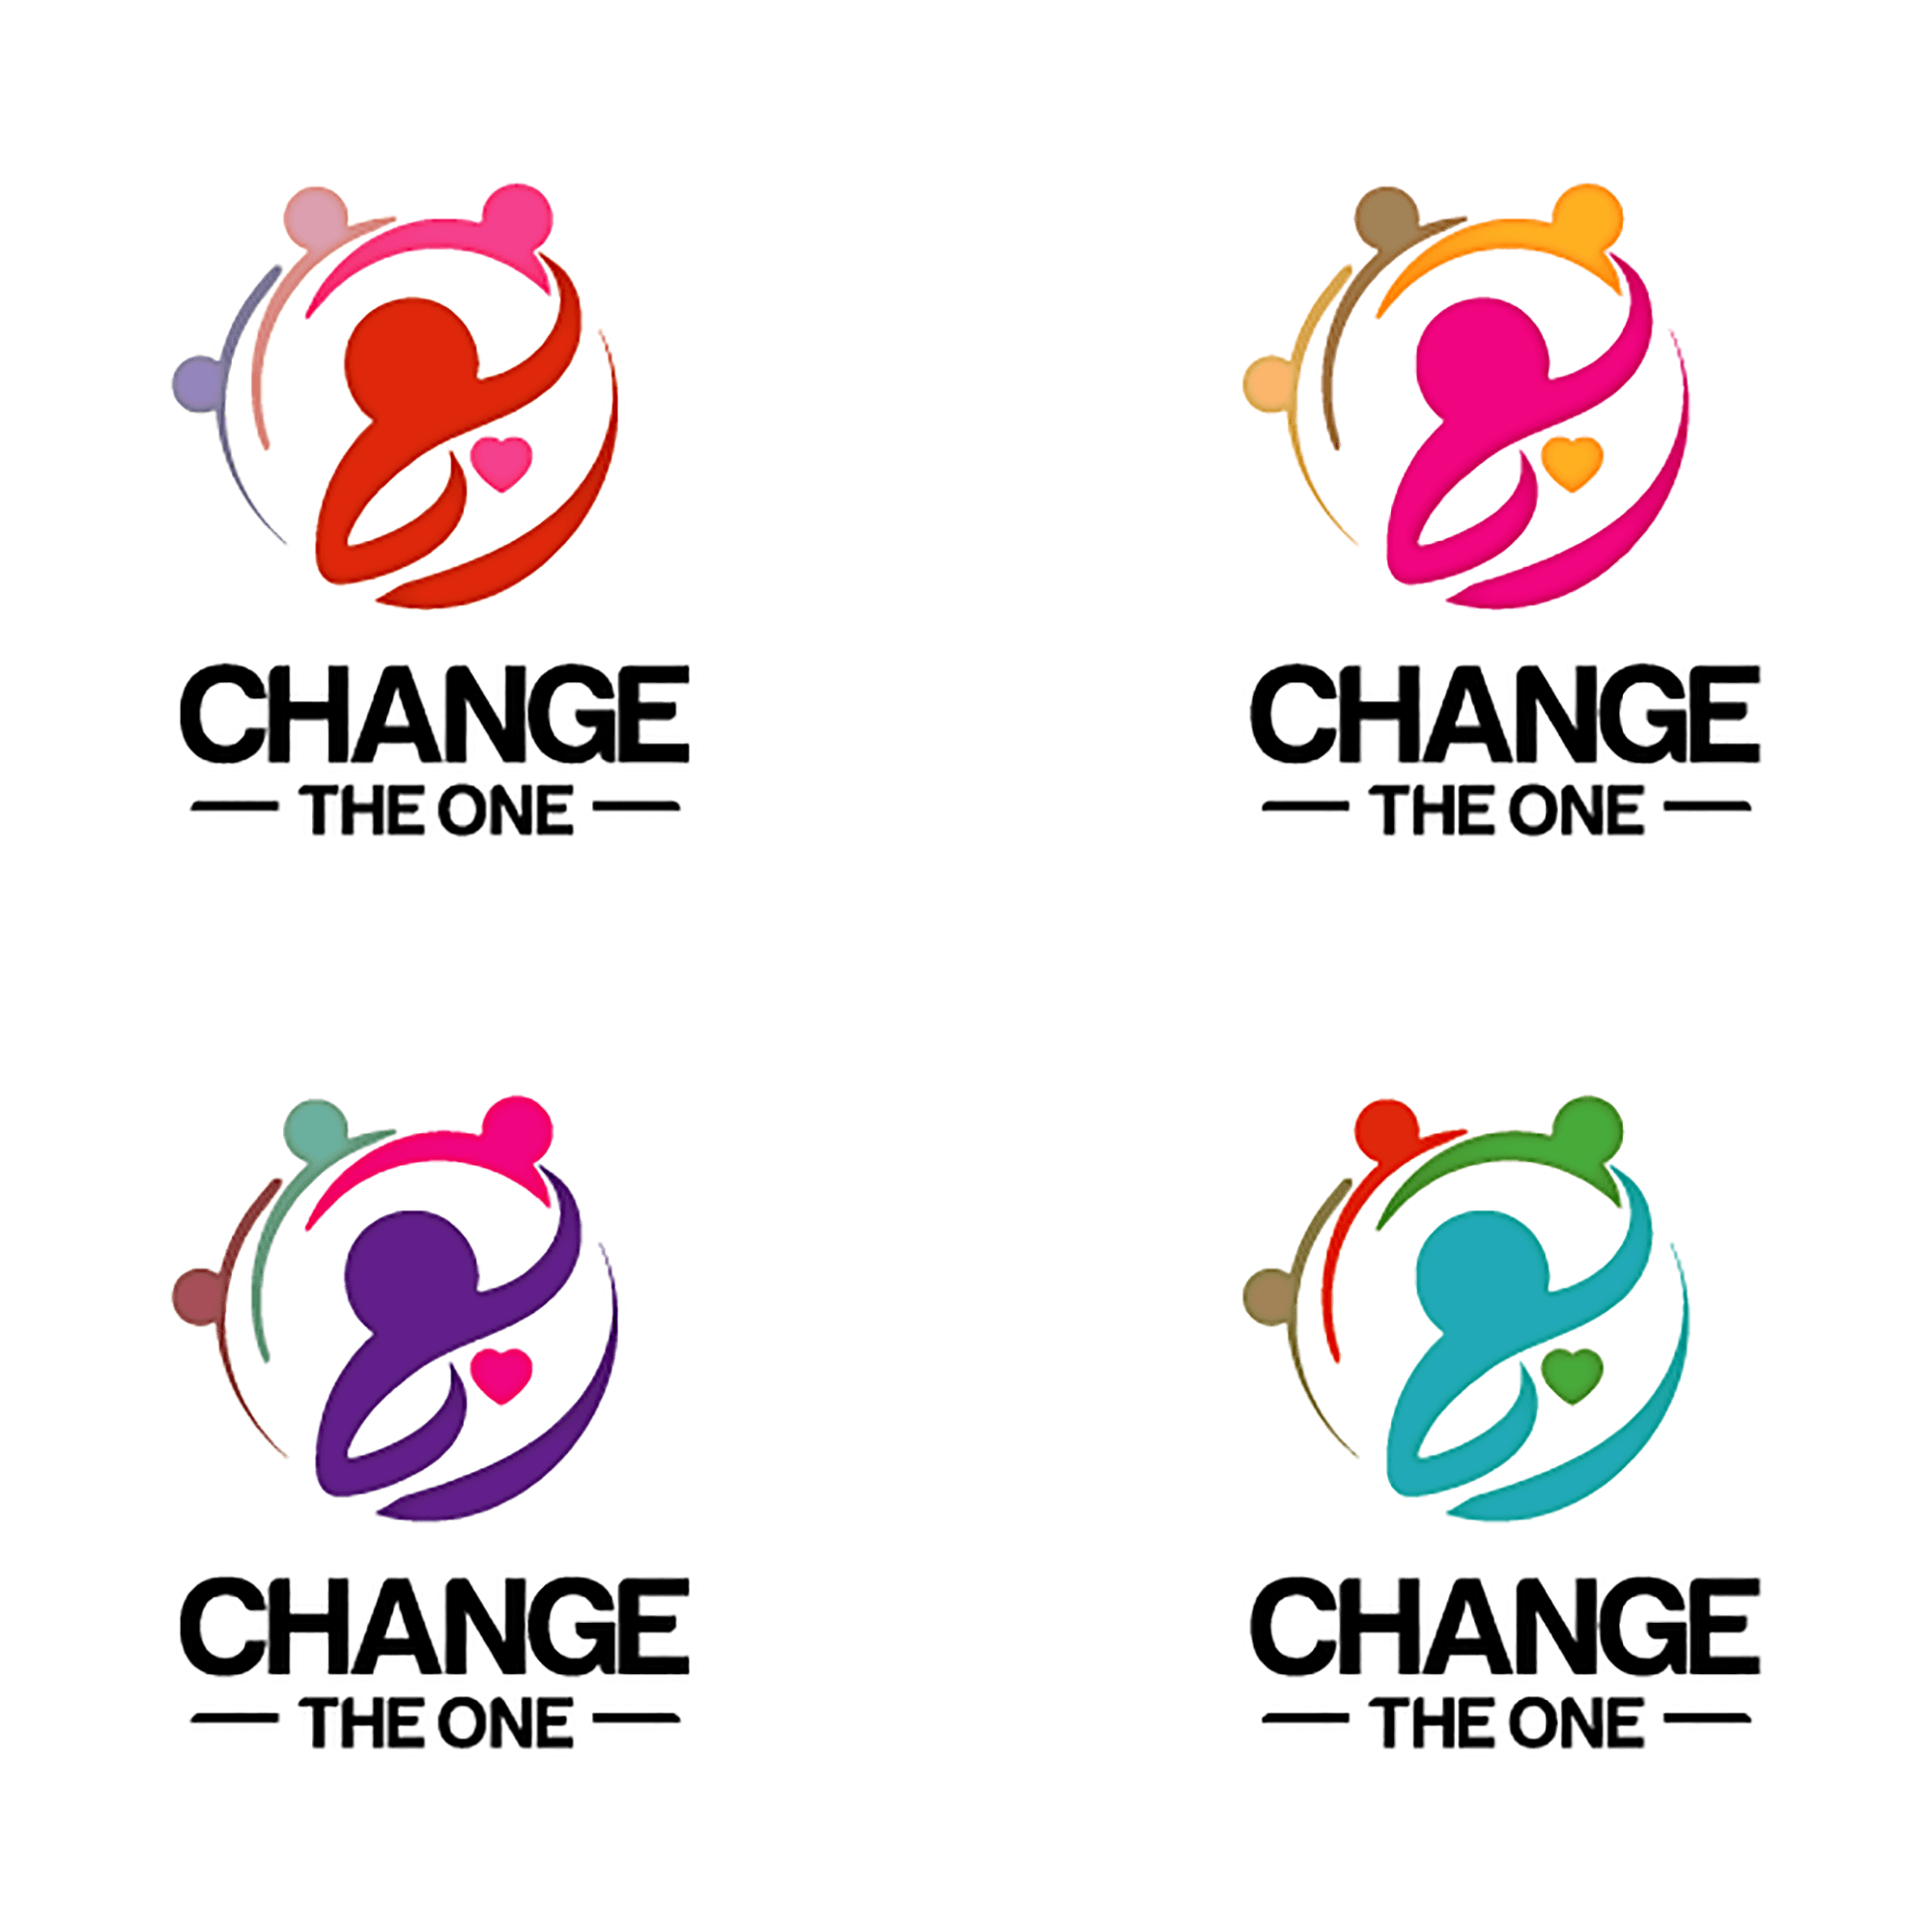 Charity Logo - Missing Charity Organization Logo Design Elements | Zillion Designs